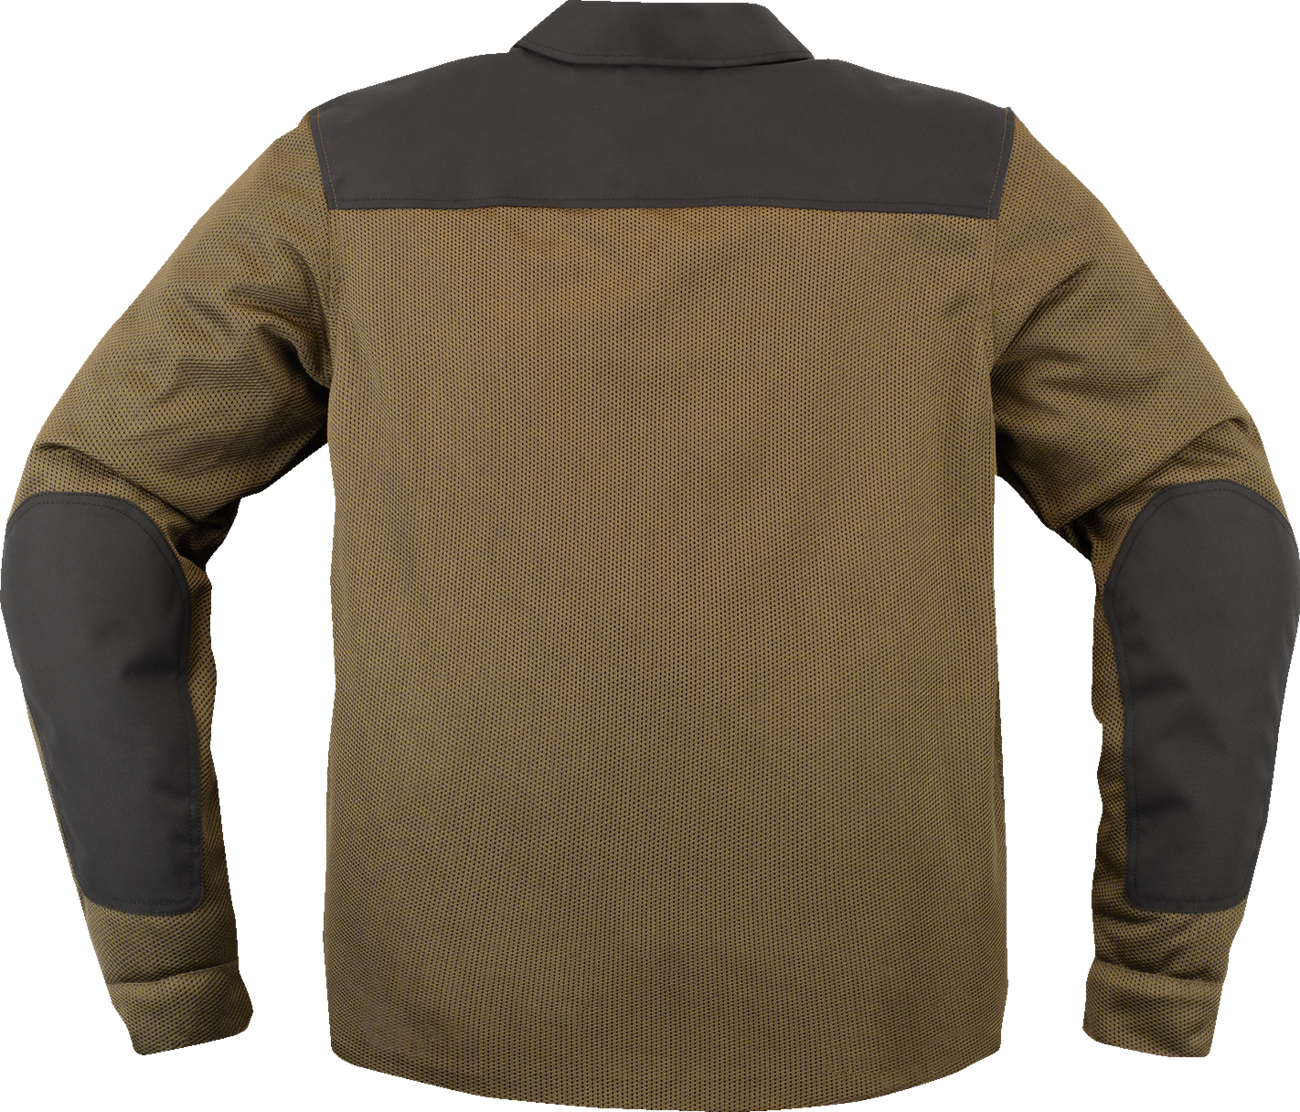 ICON Upstate Mesh CE Jacket - Green - XL 2820-6232